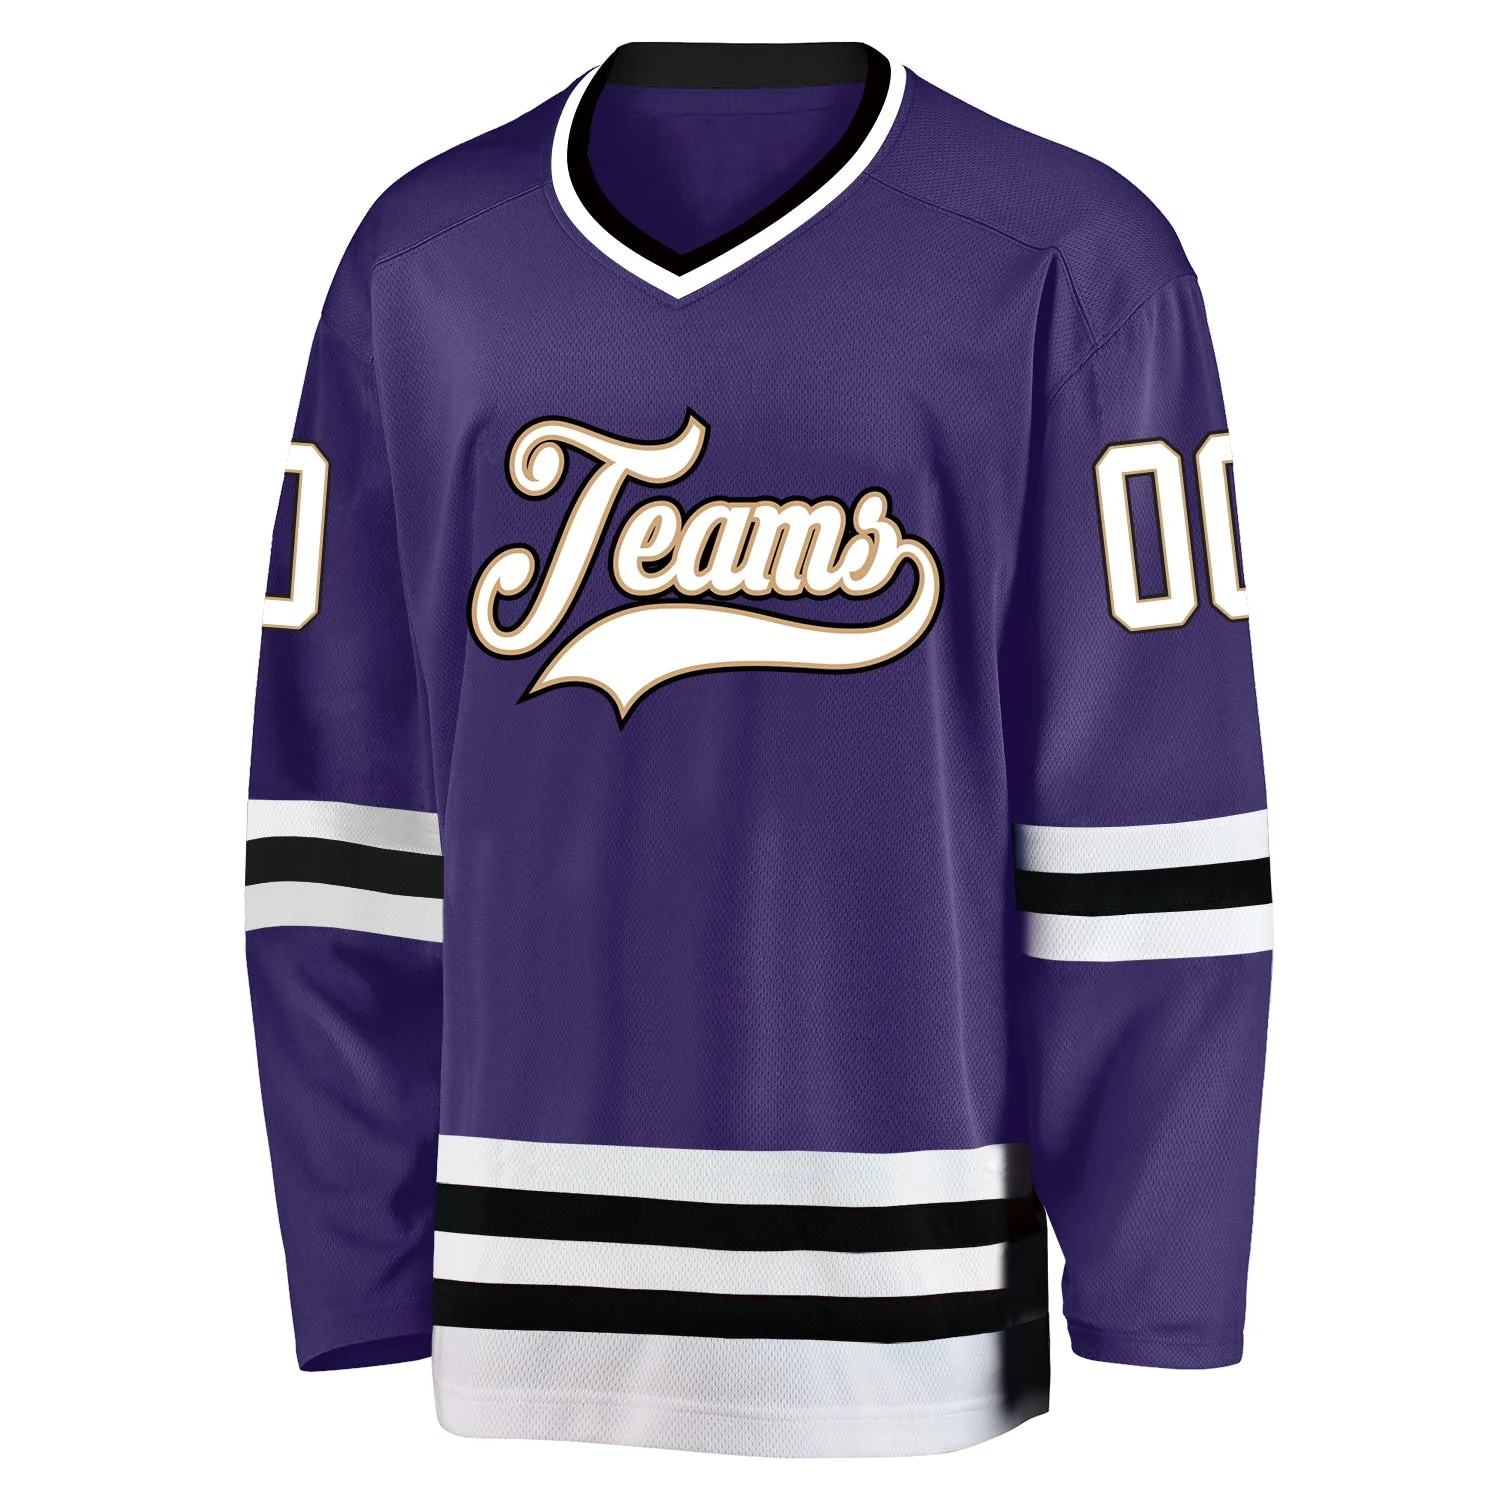 Inktee Store - Stitched And Print Purple White-Black Hockey Jersey Custom Image